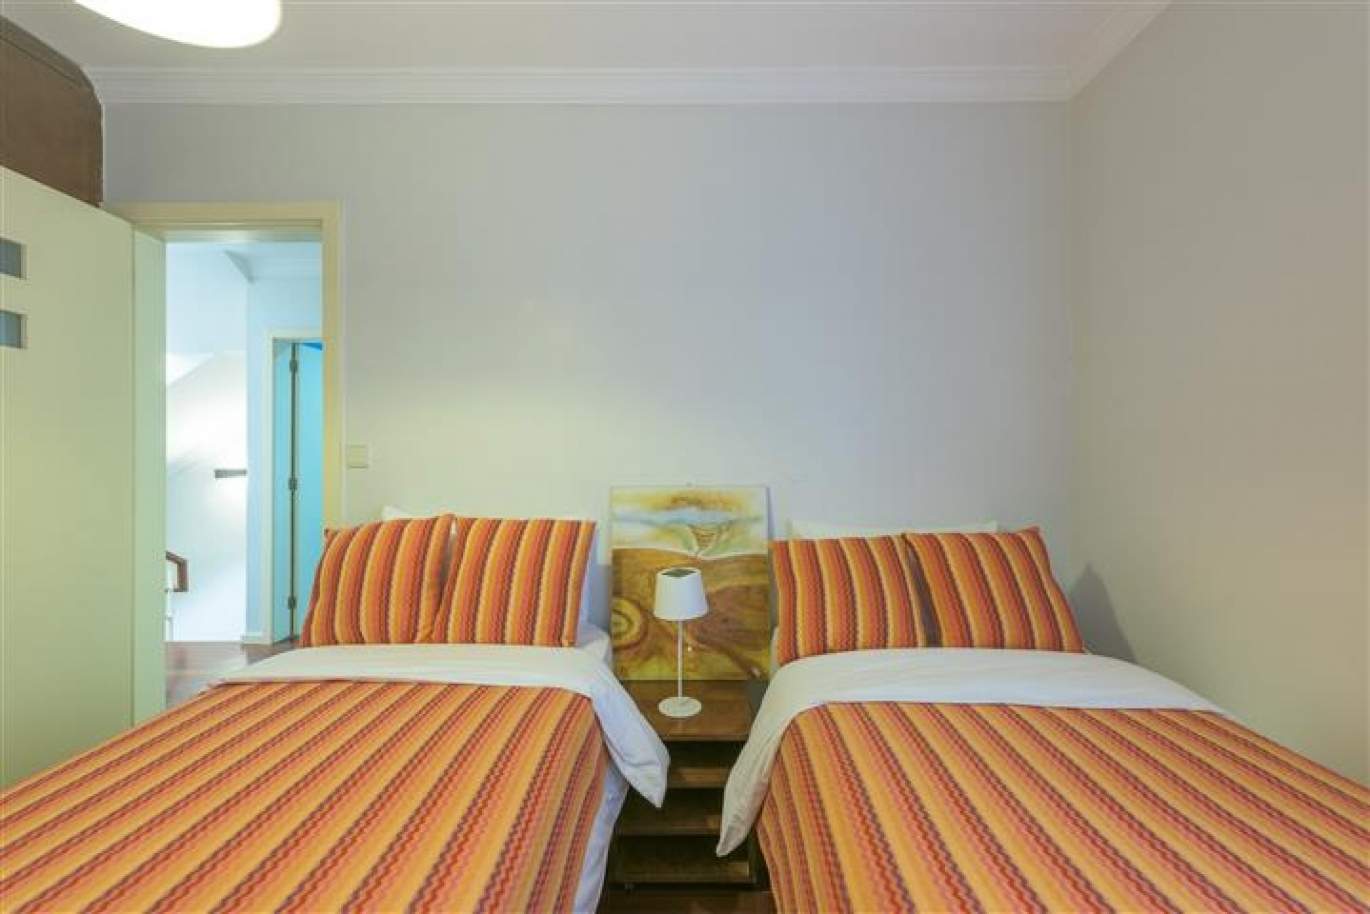 3 bedroom villa with garage, for sale, in Foz Velha, Porto, Portugal_172026